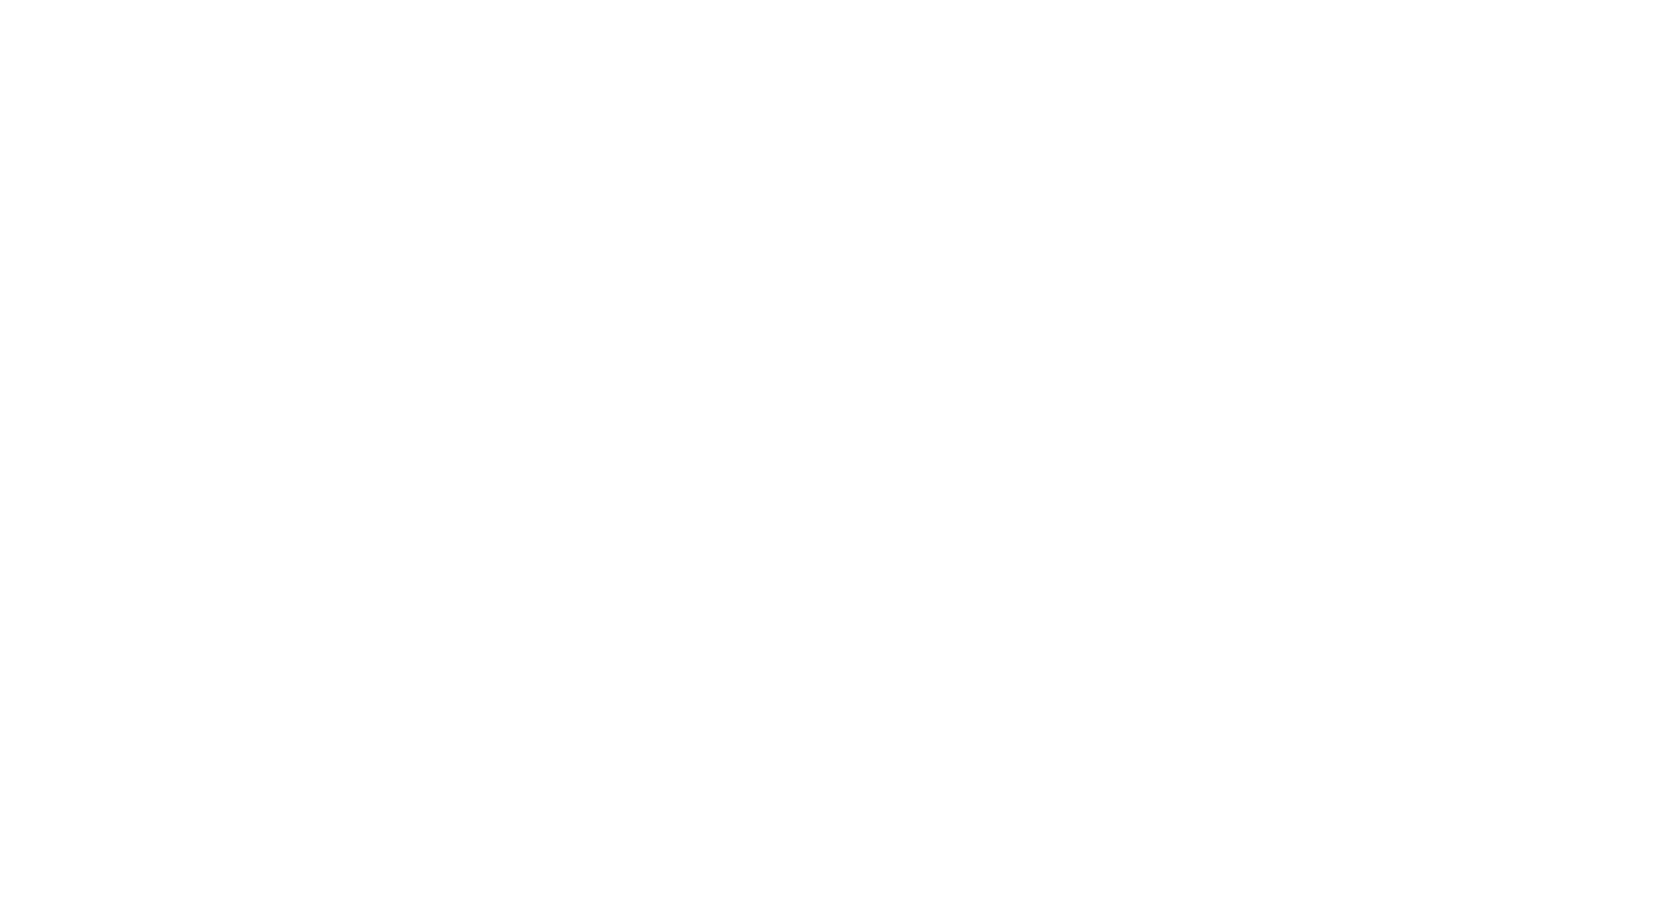 Vec Car Logo - Vail Car Service. Airports to Ski Resorts. Vail Executive Cars